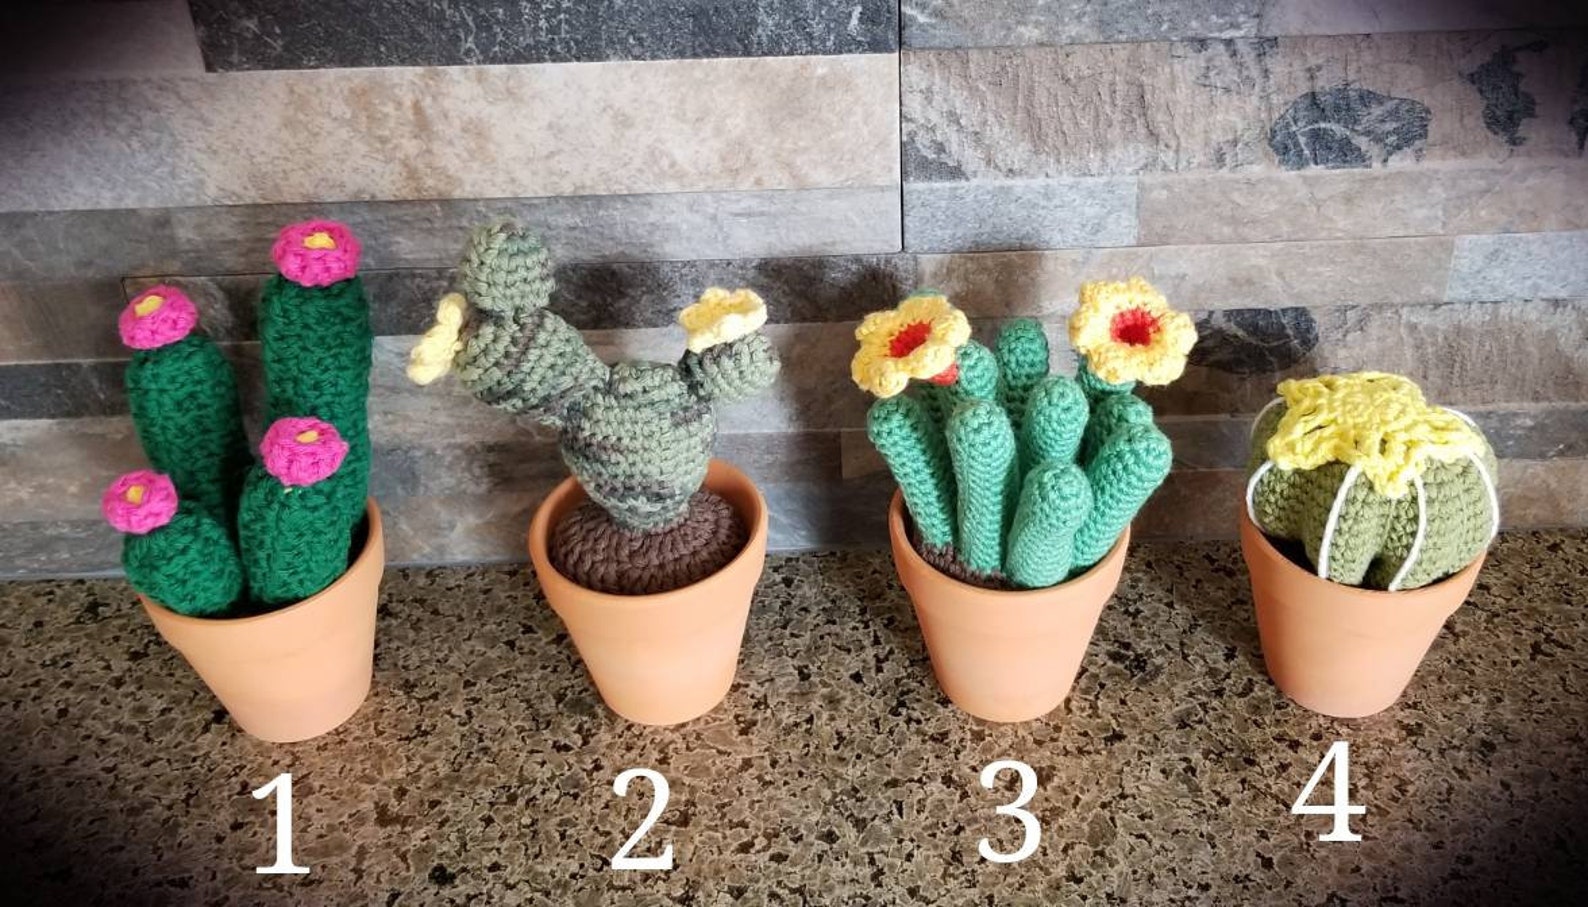 Crochet Cactus Amigurumi Cactus Plants That Don't Die - Etsy